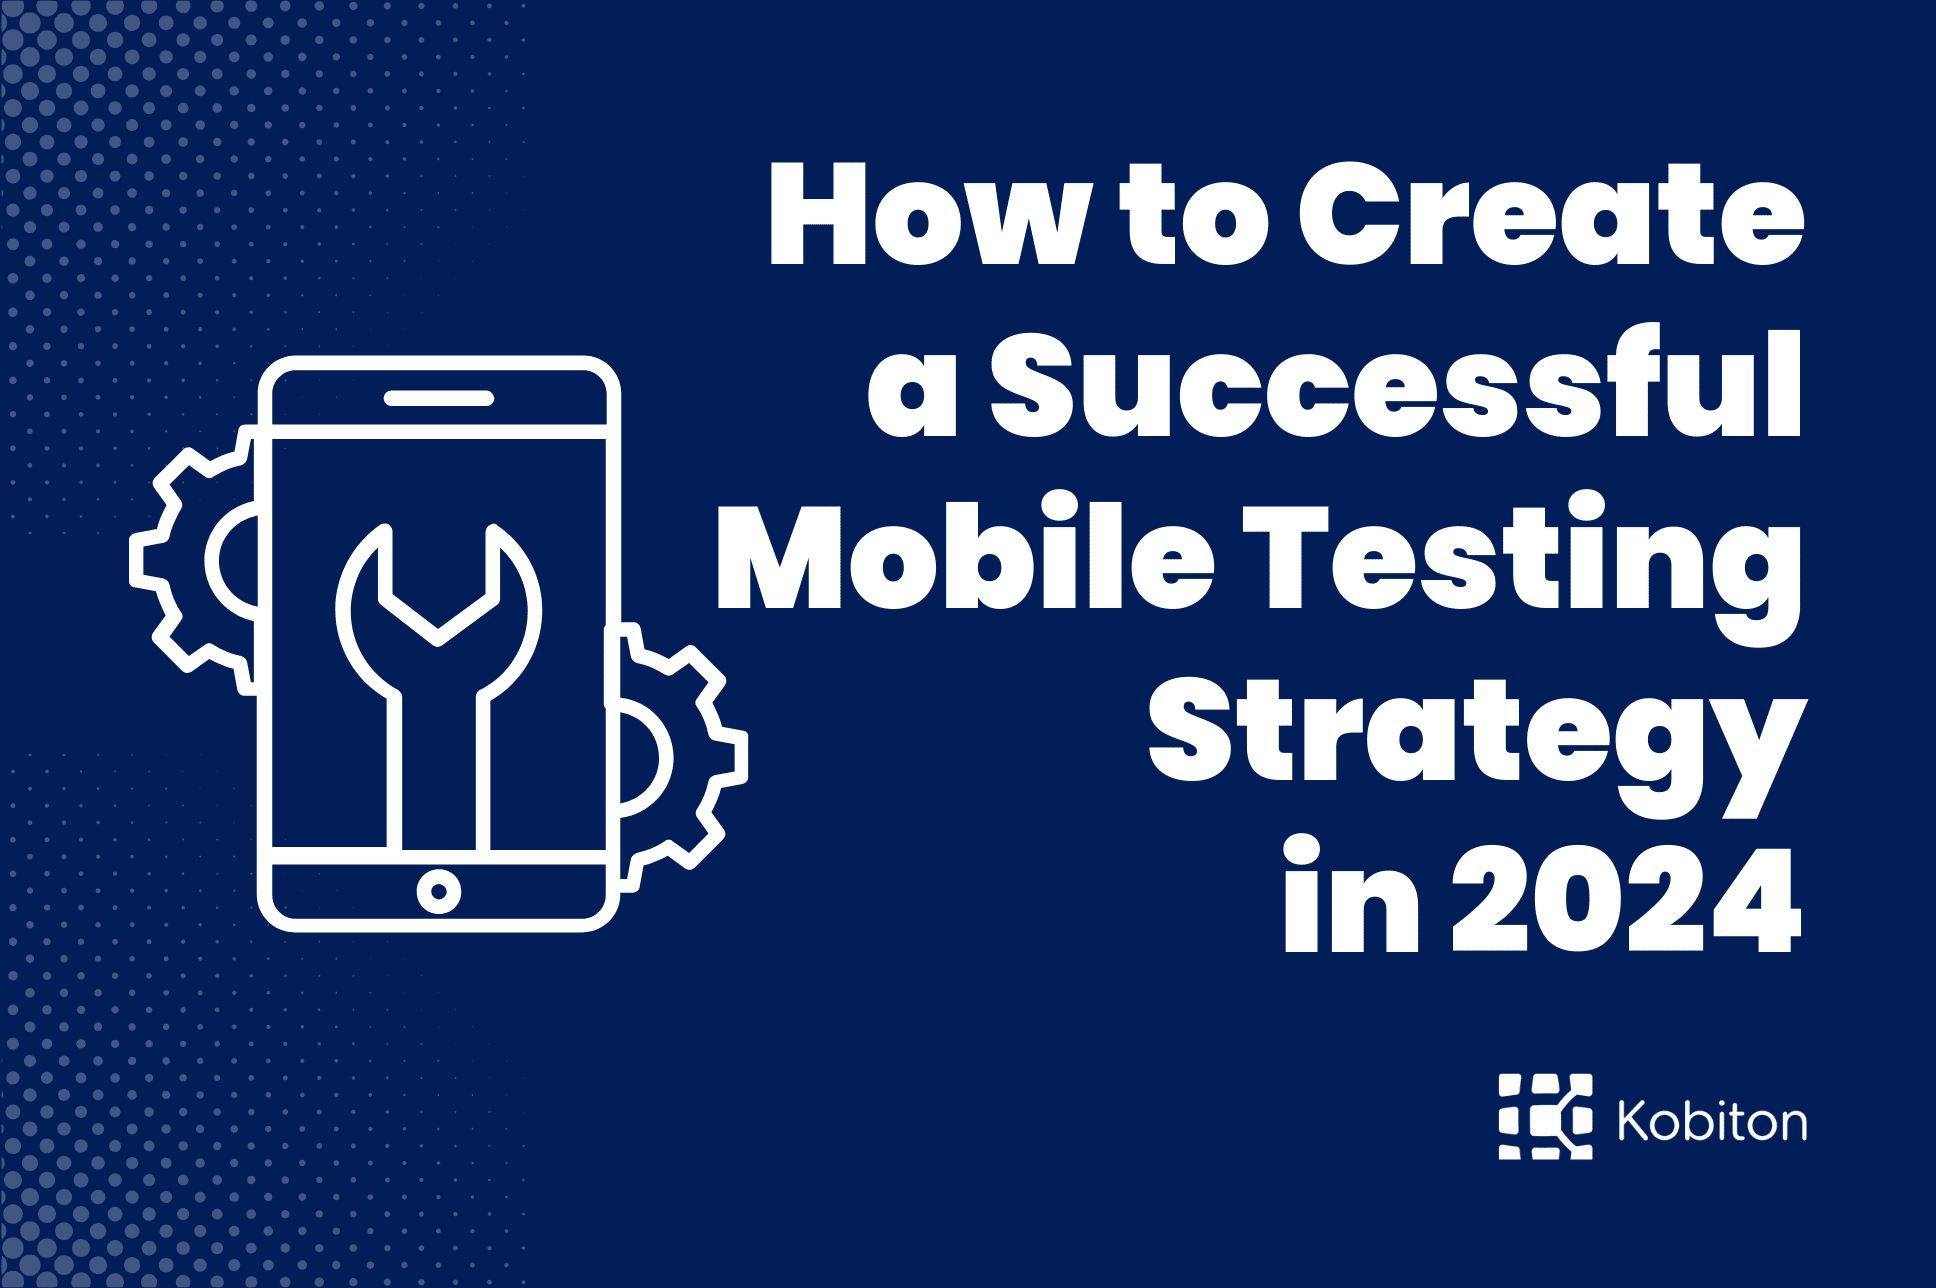 Mobile testing strategy blog image